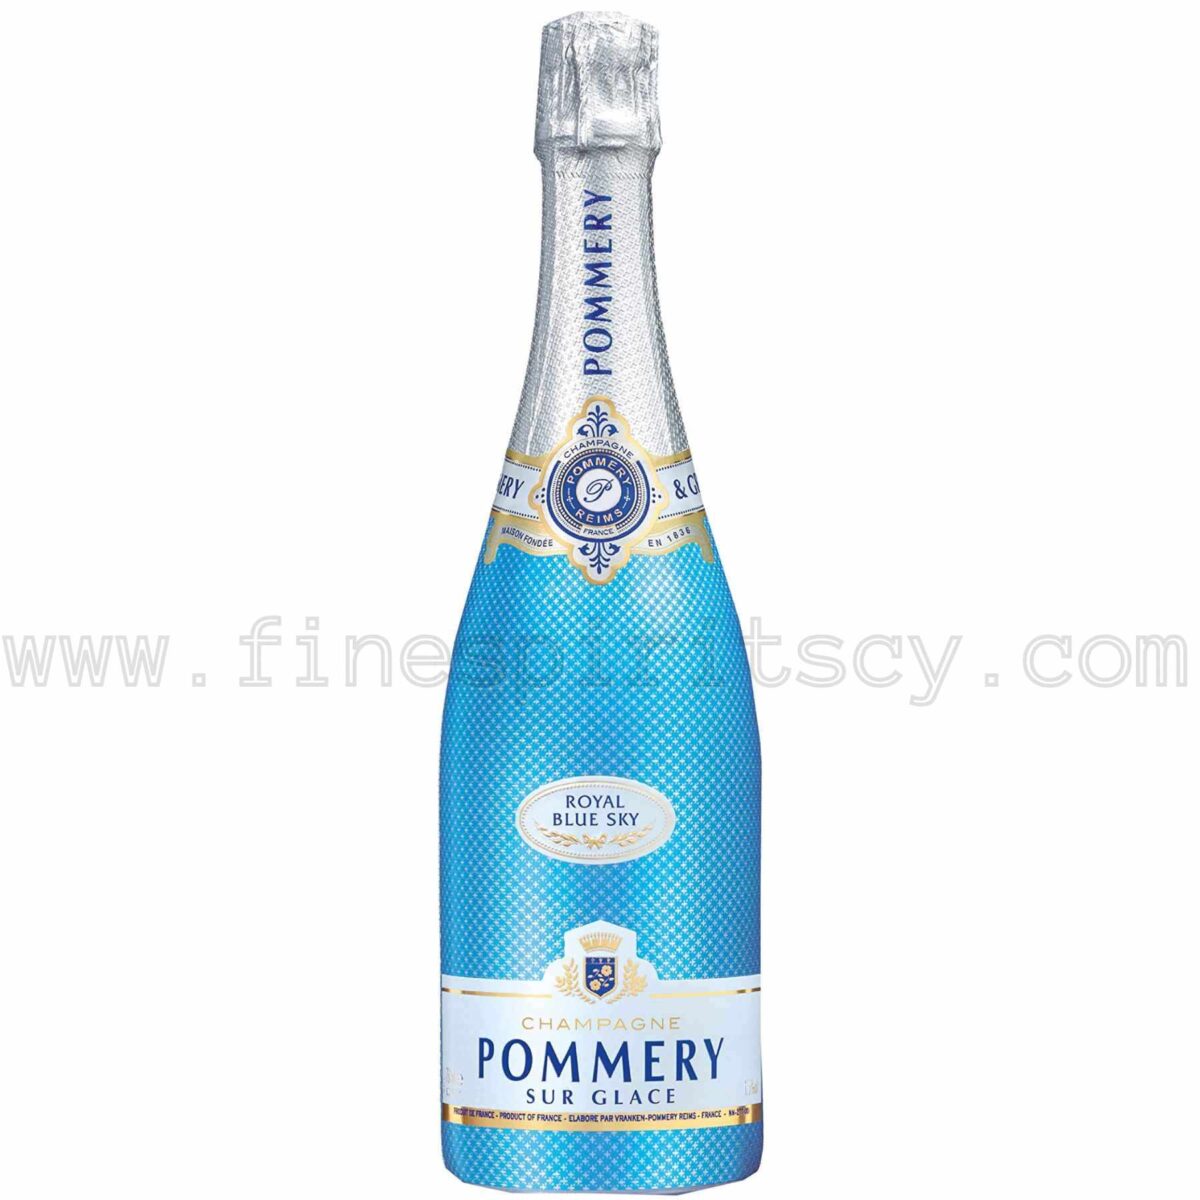 Pommery Royal Blue Sky Champagne Cuvee